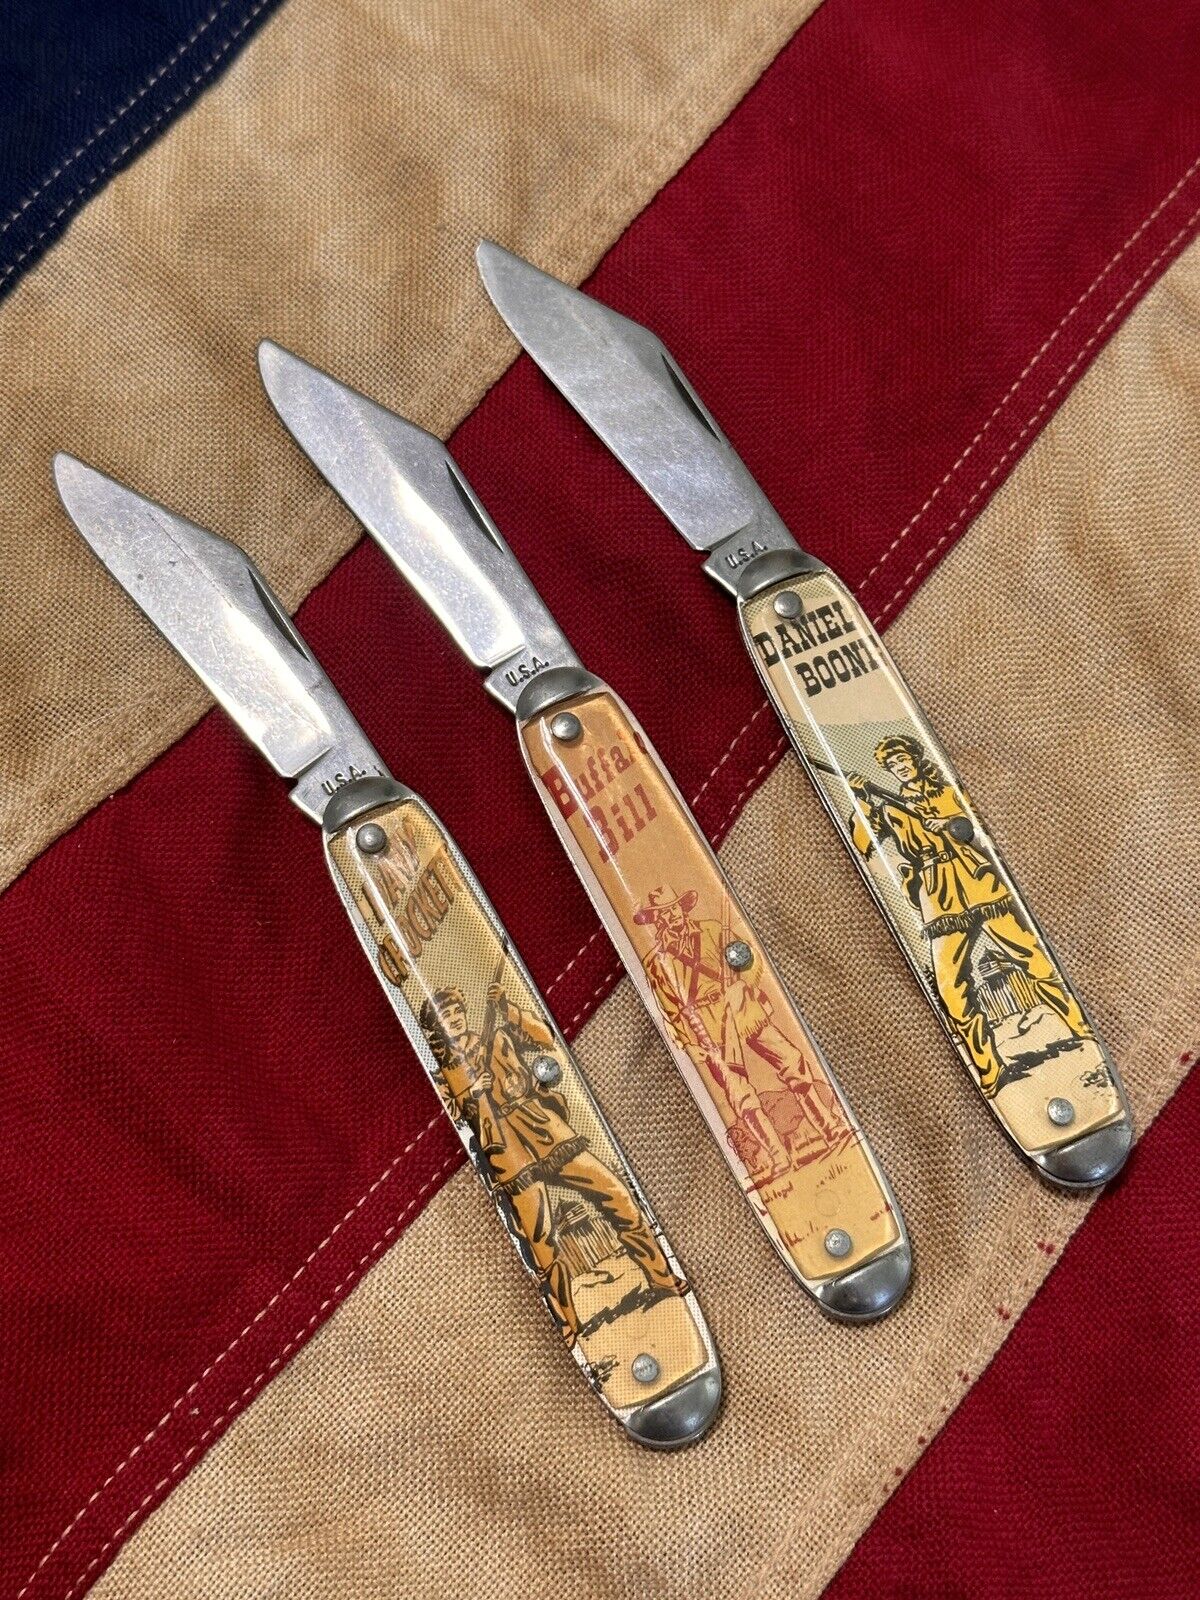 Daniel Boone Davy Crockett Buffalo Bill Novelty Pocket Knife Set Of 3